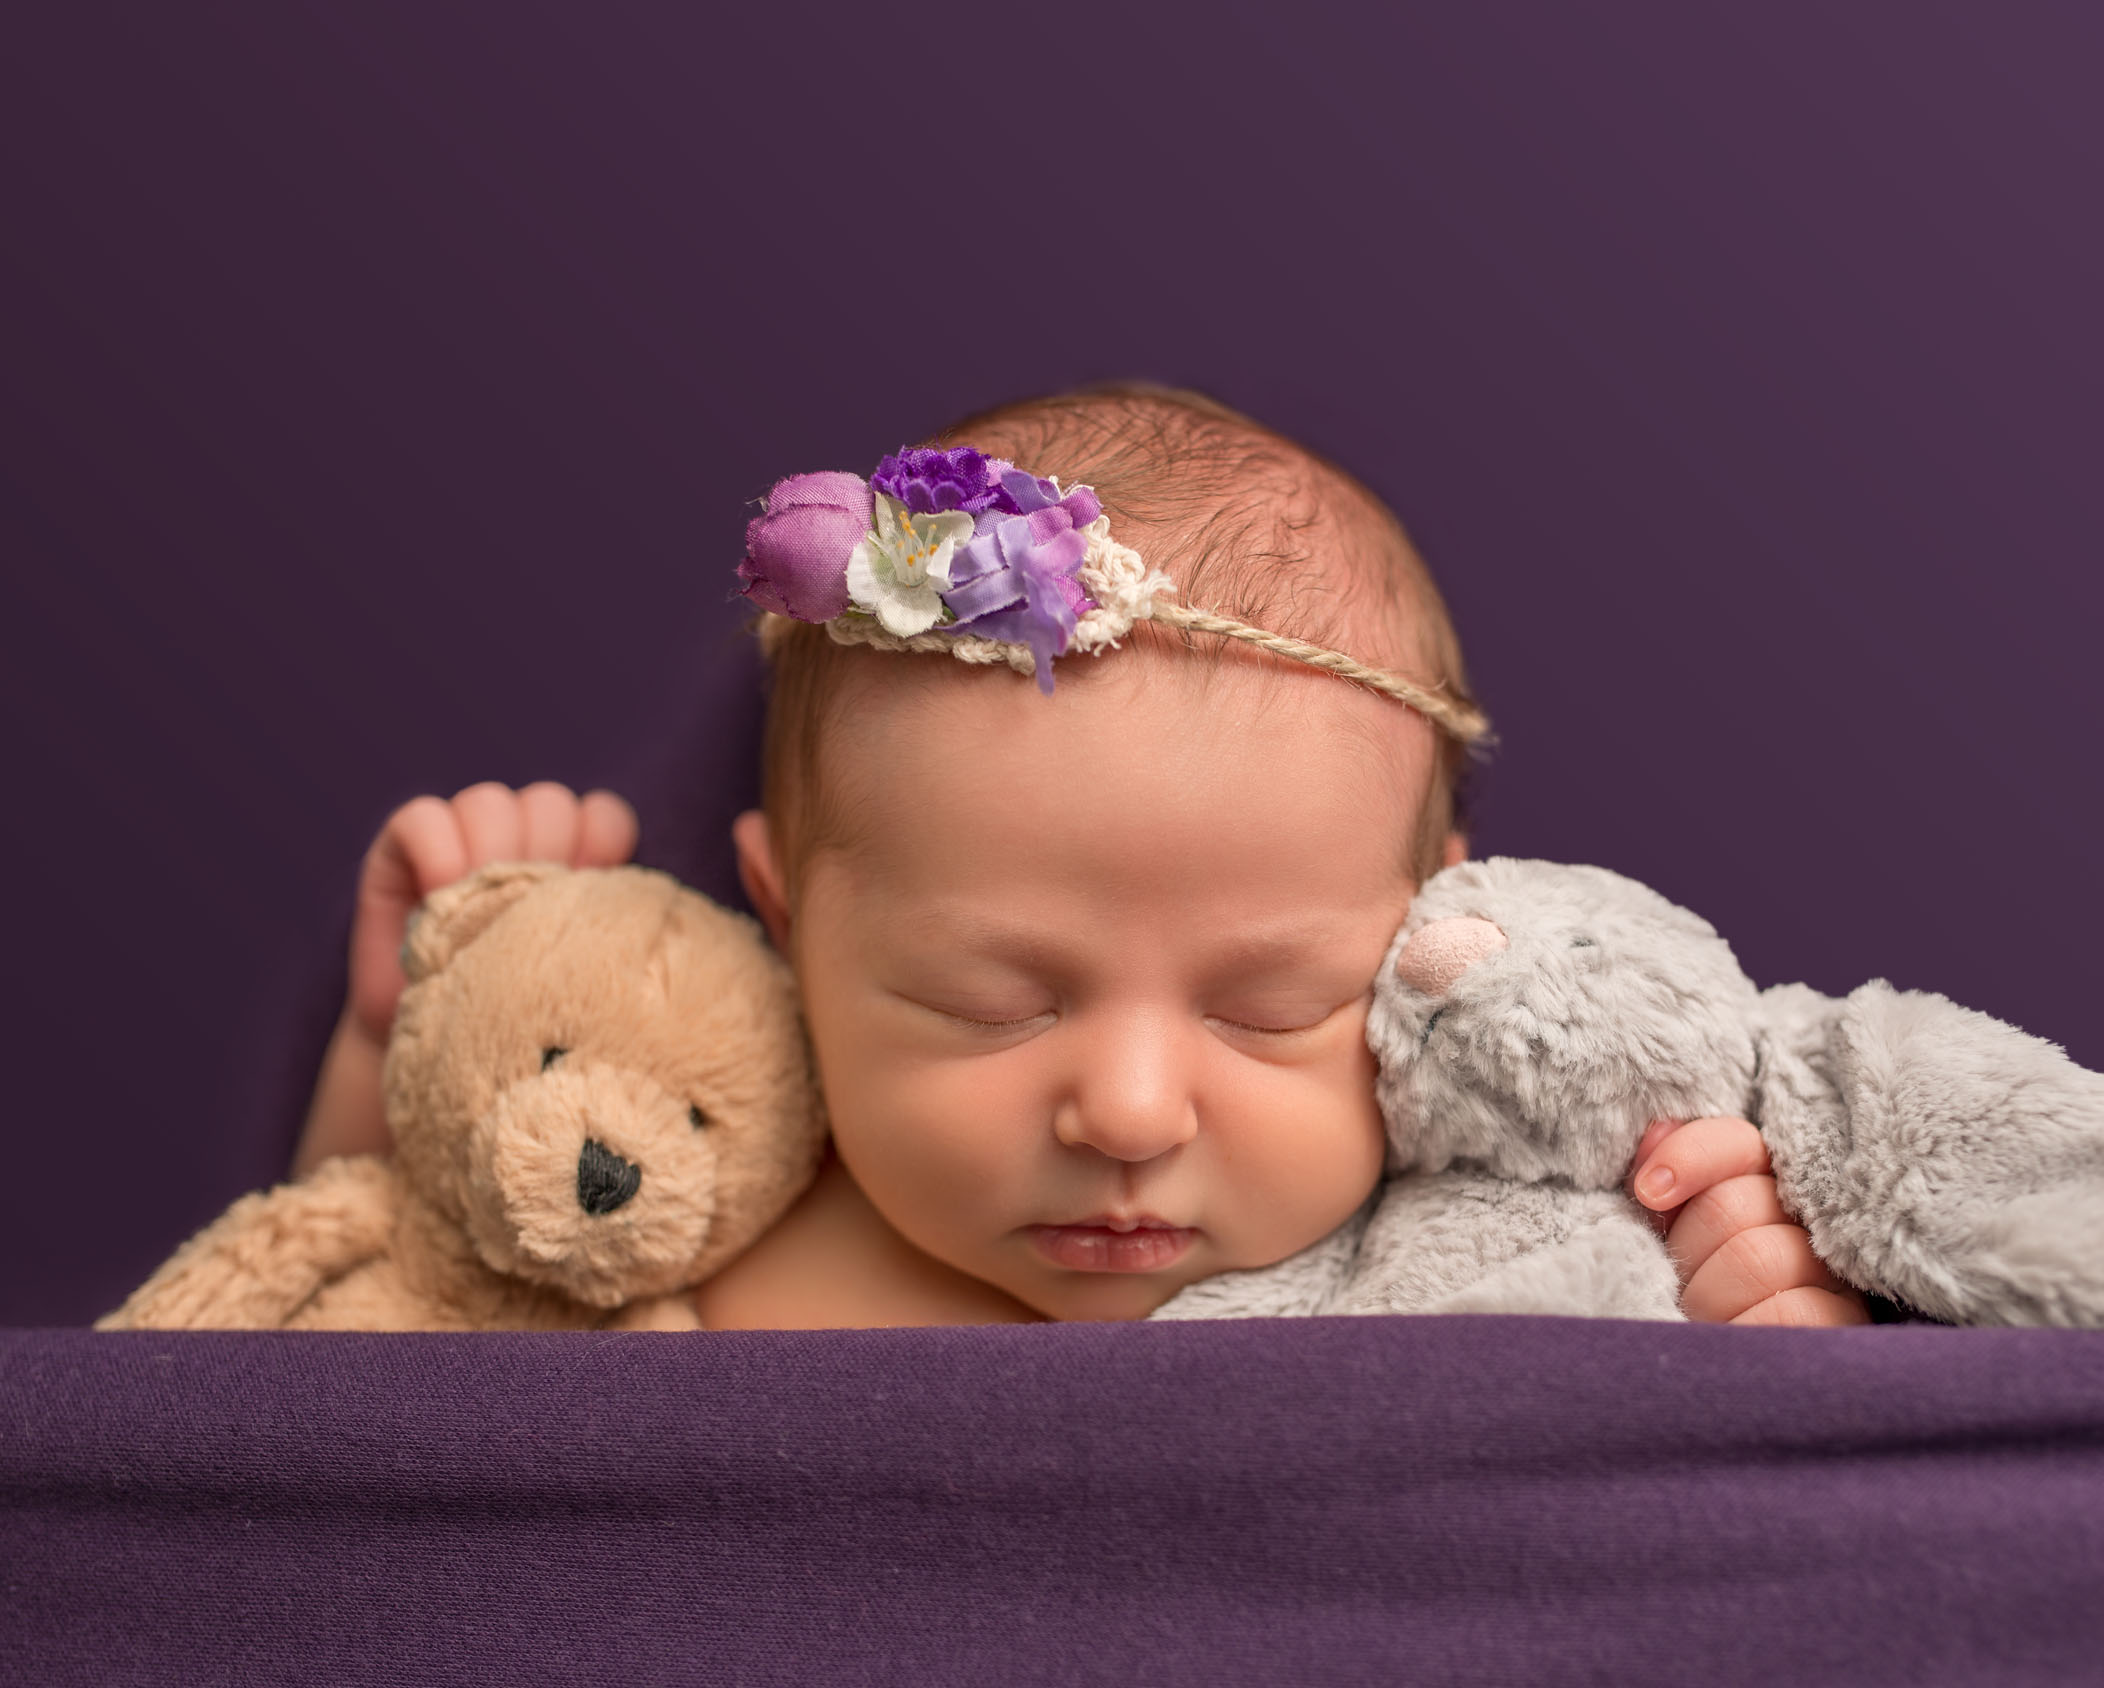 newborn girl sleeping in purple bed with her stuffed animals